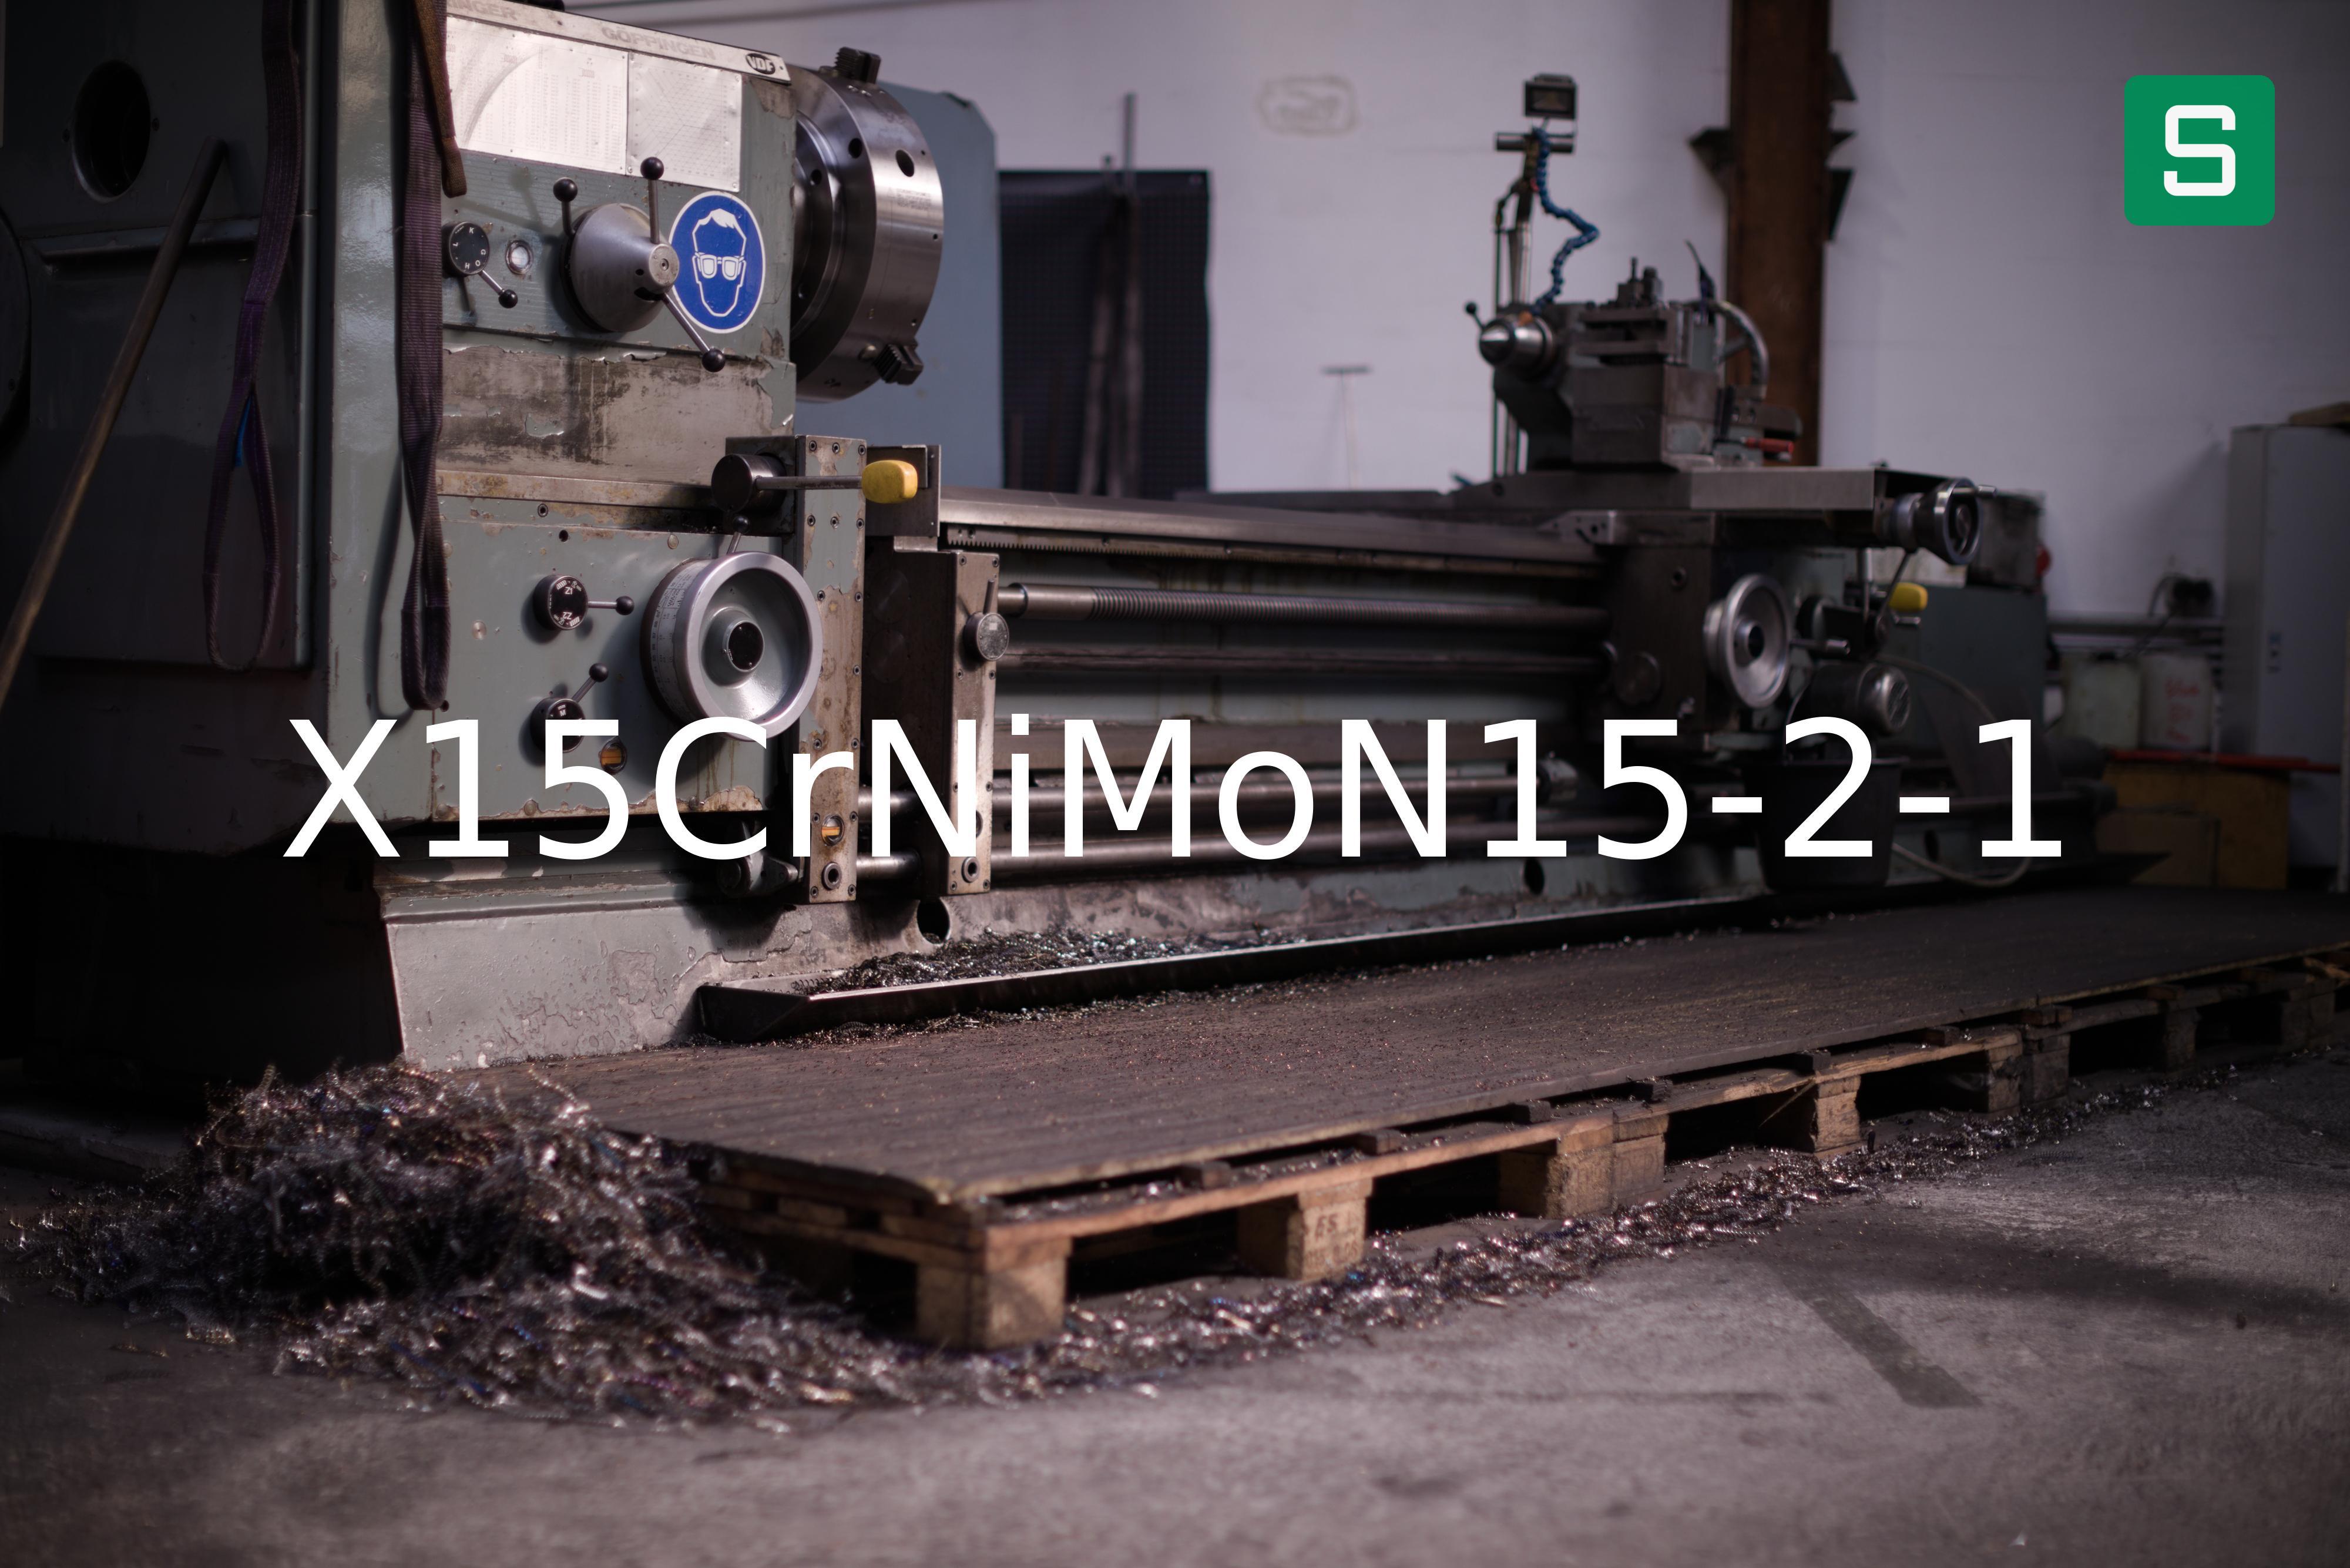 Steel Material: X15CrNiMoN15-2-1